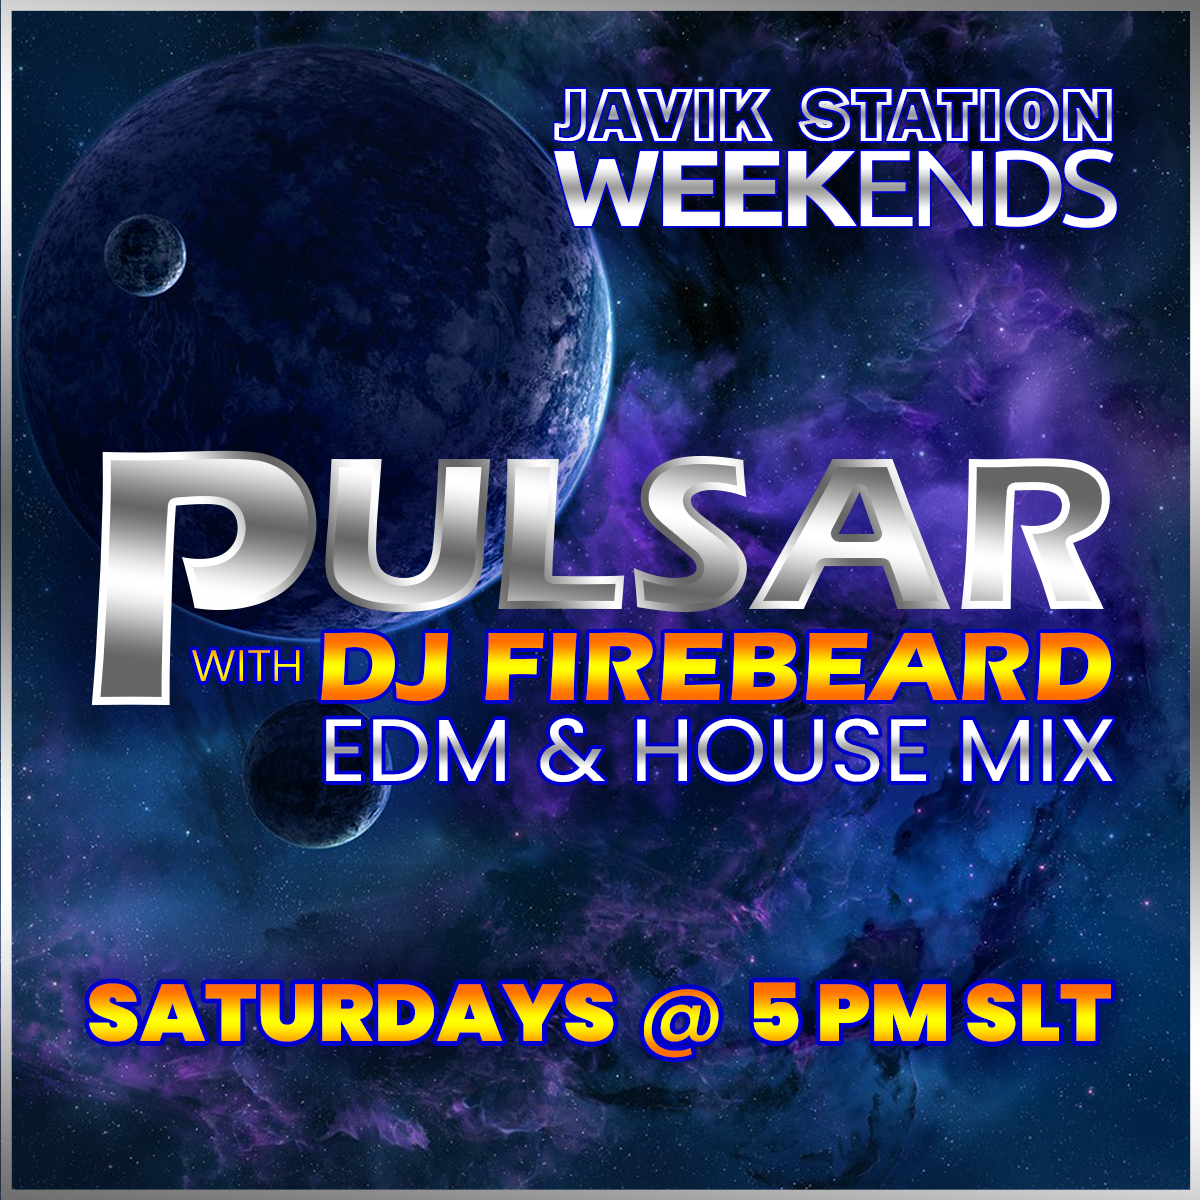 SATURDAYS: PULSAR with DJ FIREBEARD!